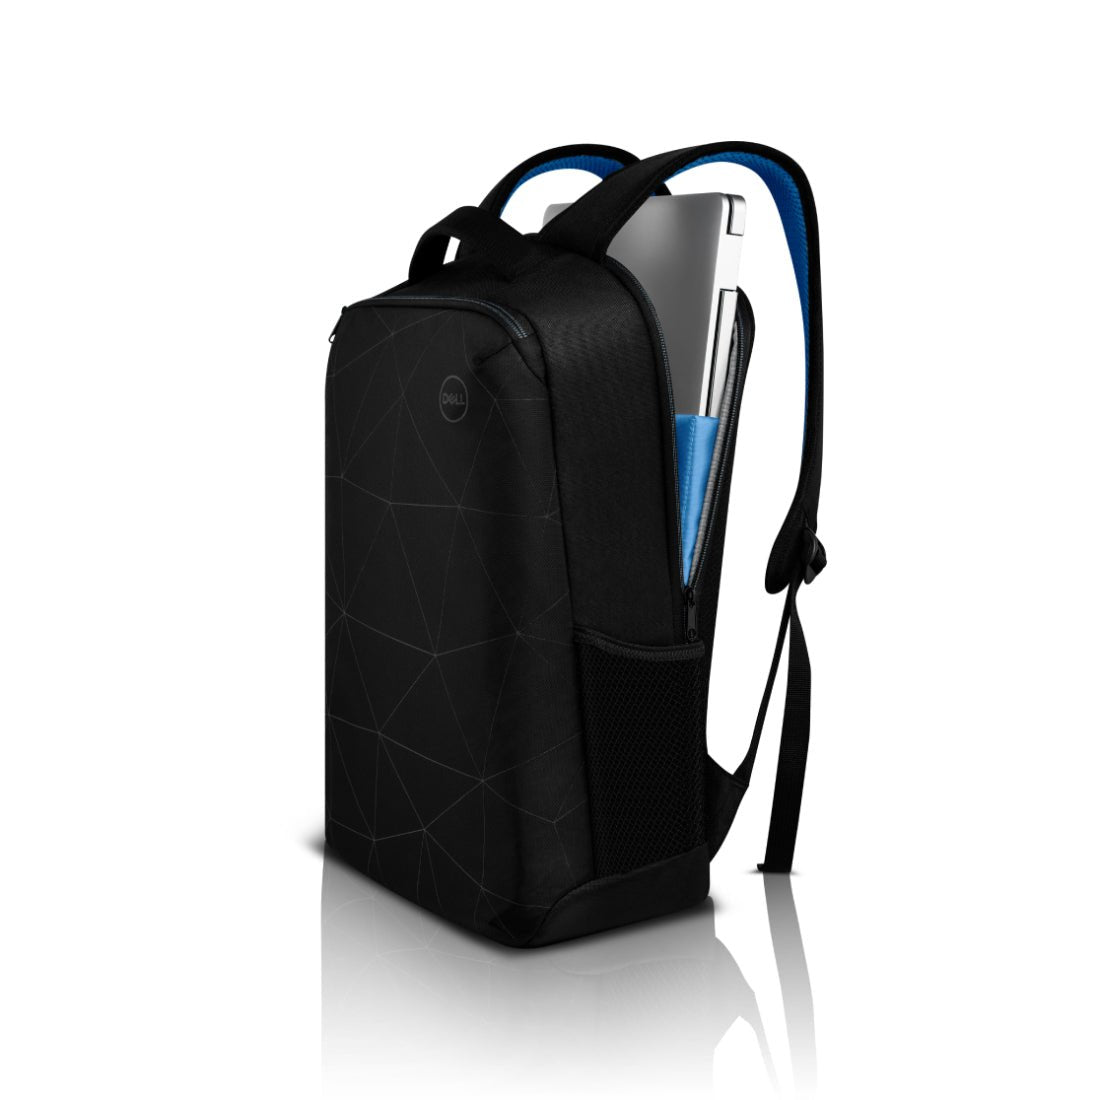 Dell ES1520P Backpack & MS3320W Wireless Mouse - Black - حقيبة حاسوب محمول و فأرة - Store 974 | ستور ٩٧٤